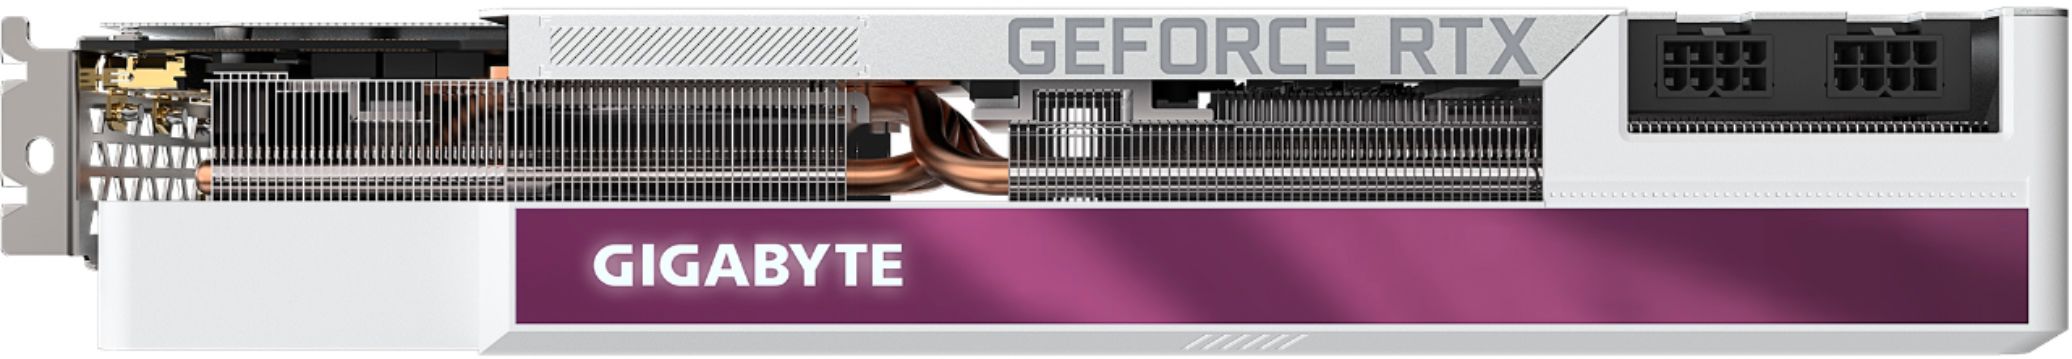 Best Buy: GIGABYTE NVIDIA GeForce RTX 3090 VISION 24GB GDDR6 PCI